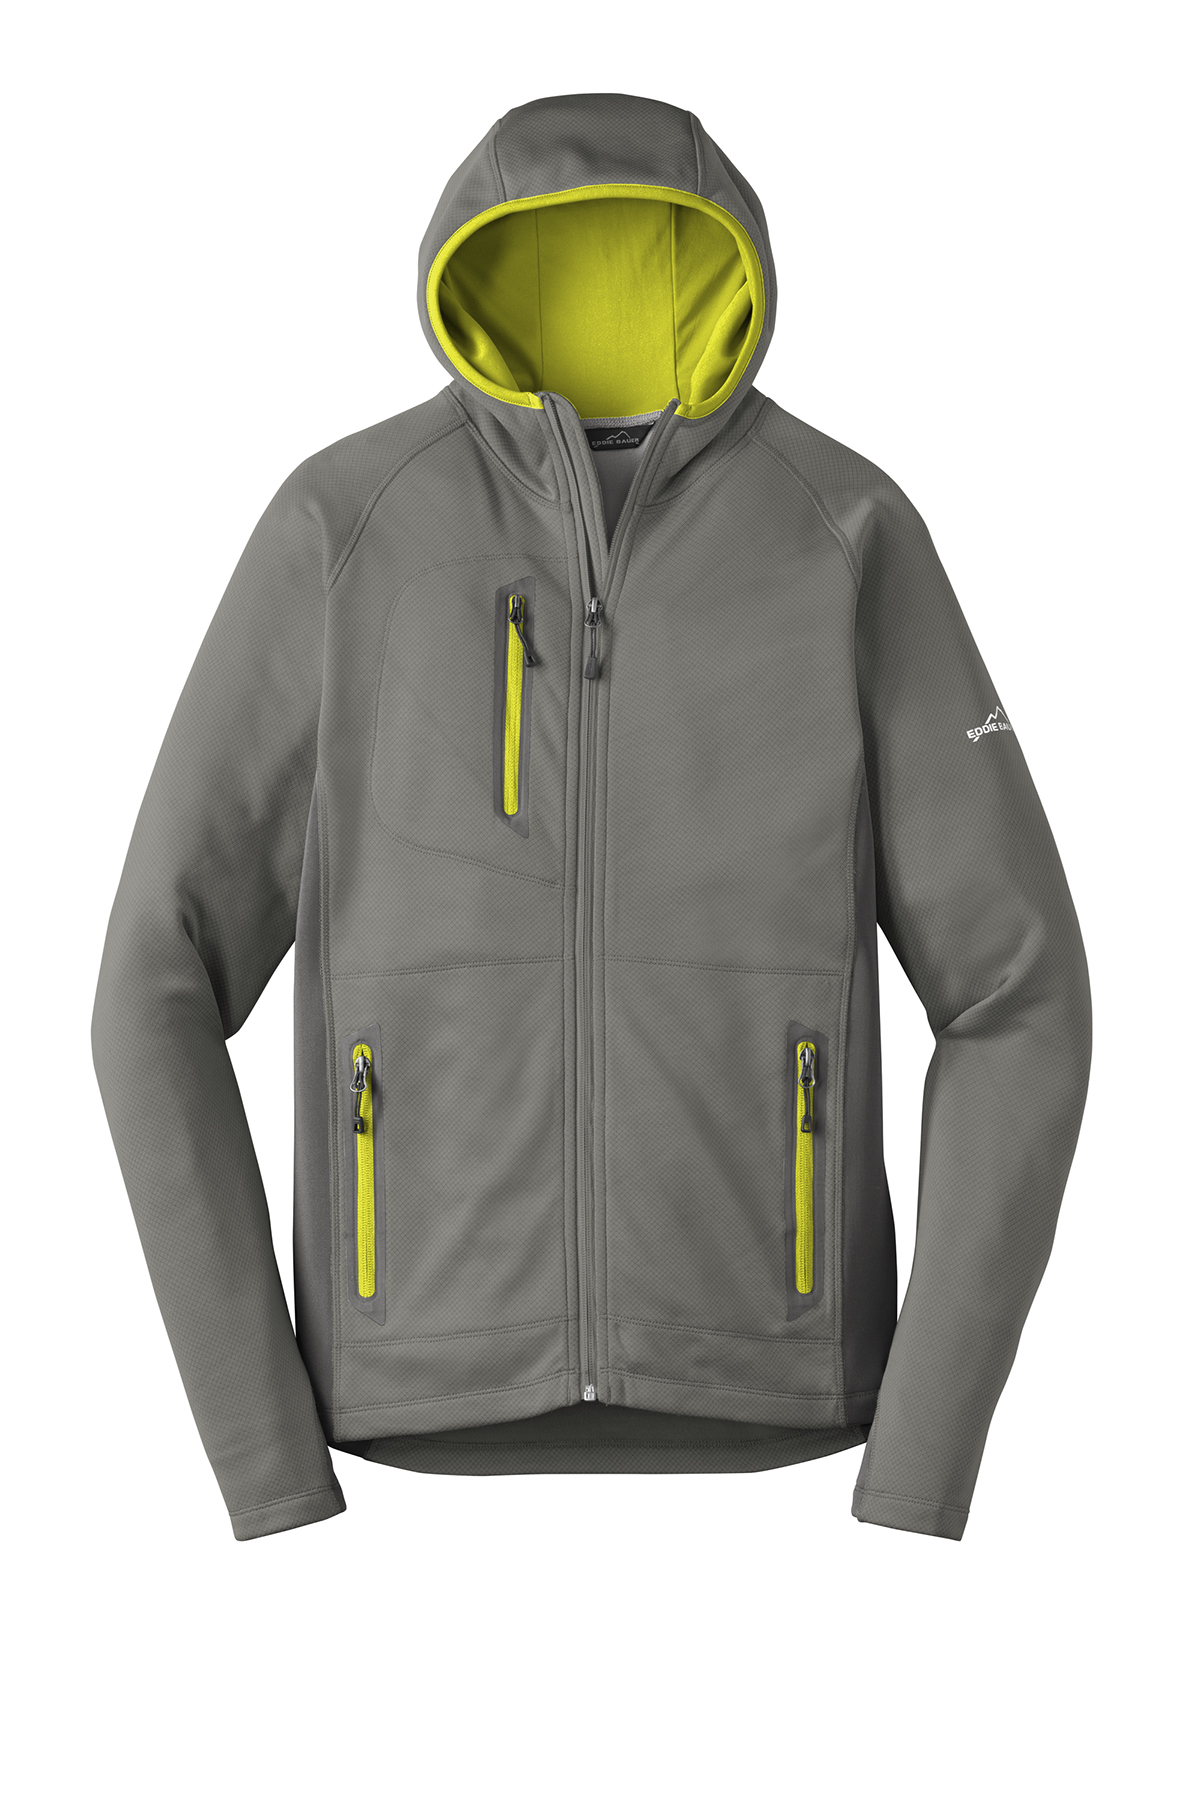 Eddie Bauer Sport Hooded Full-Zip Fleece Jacket | Product | SanMar